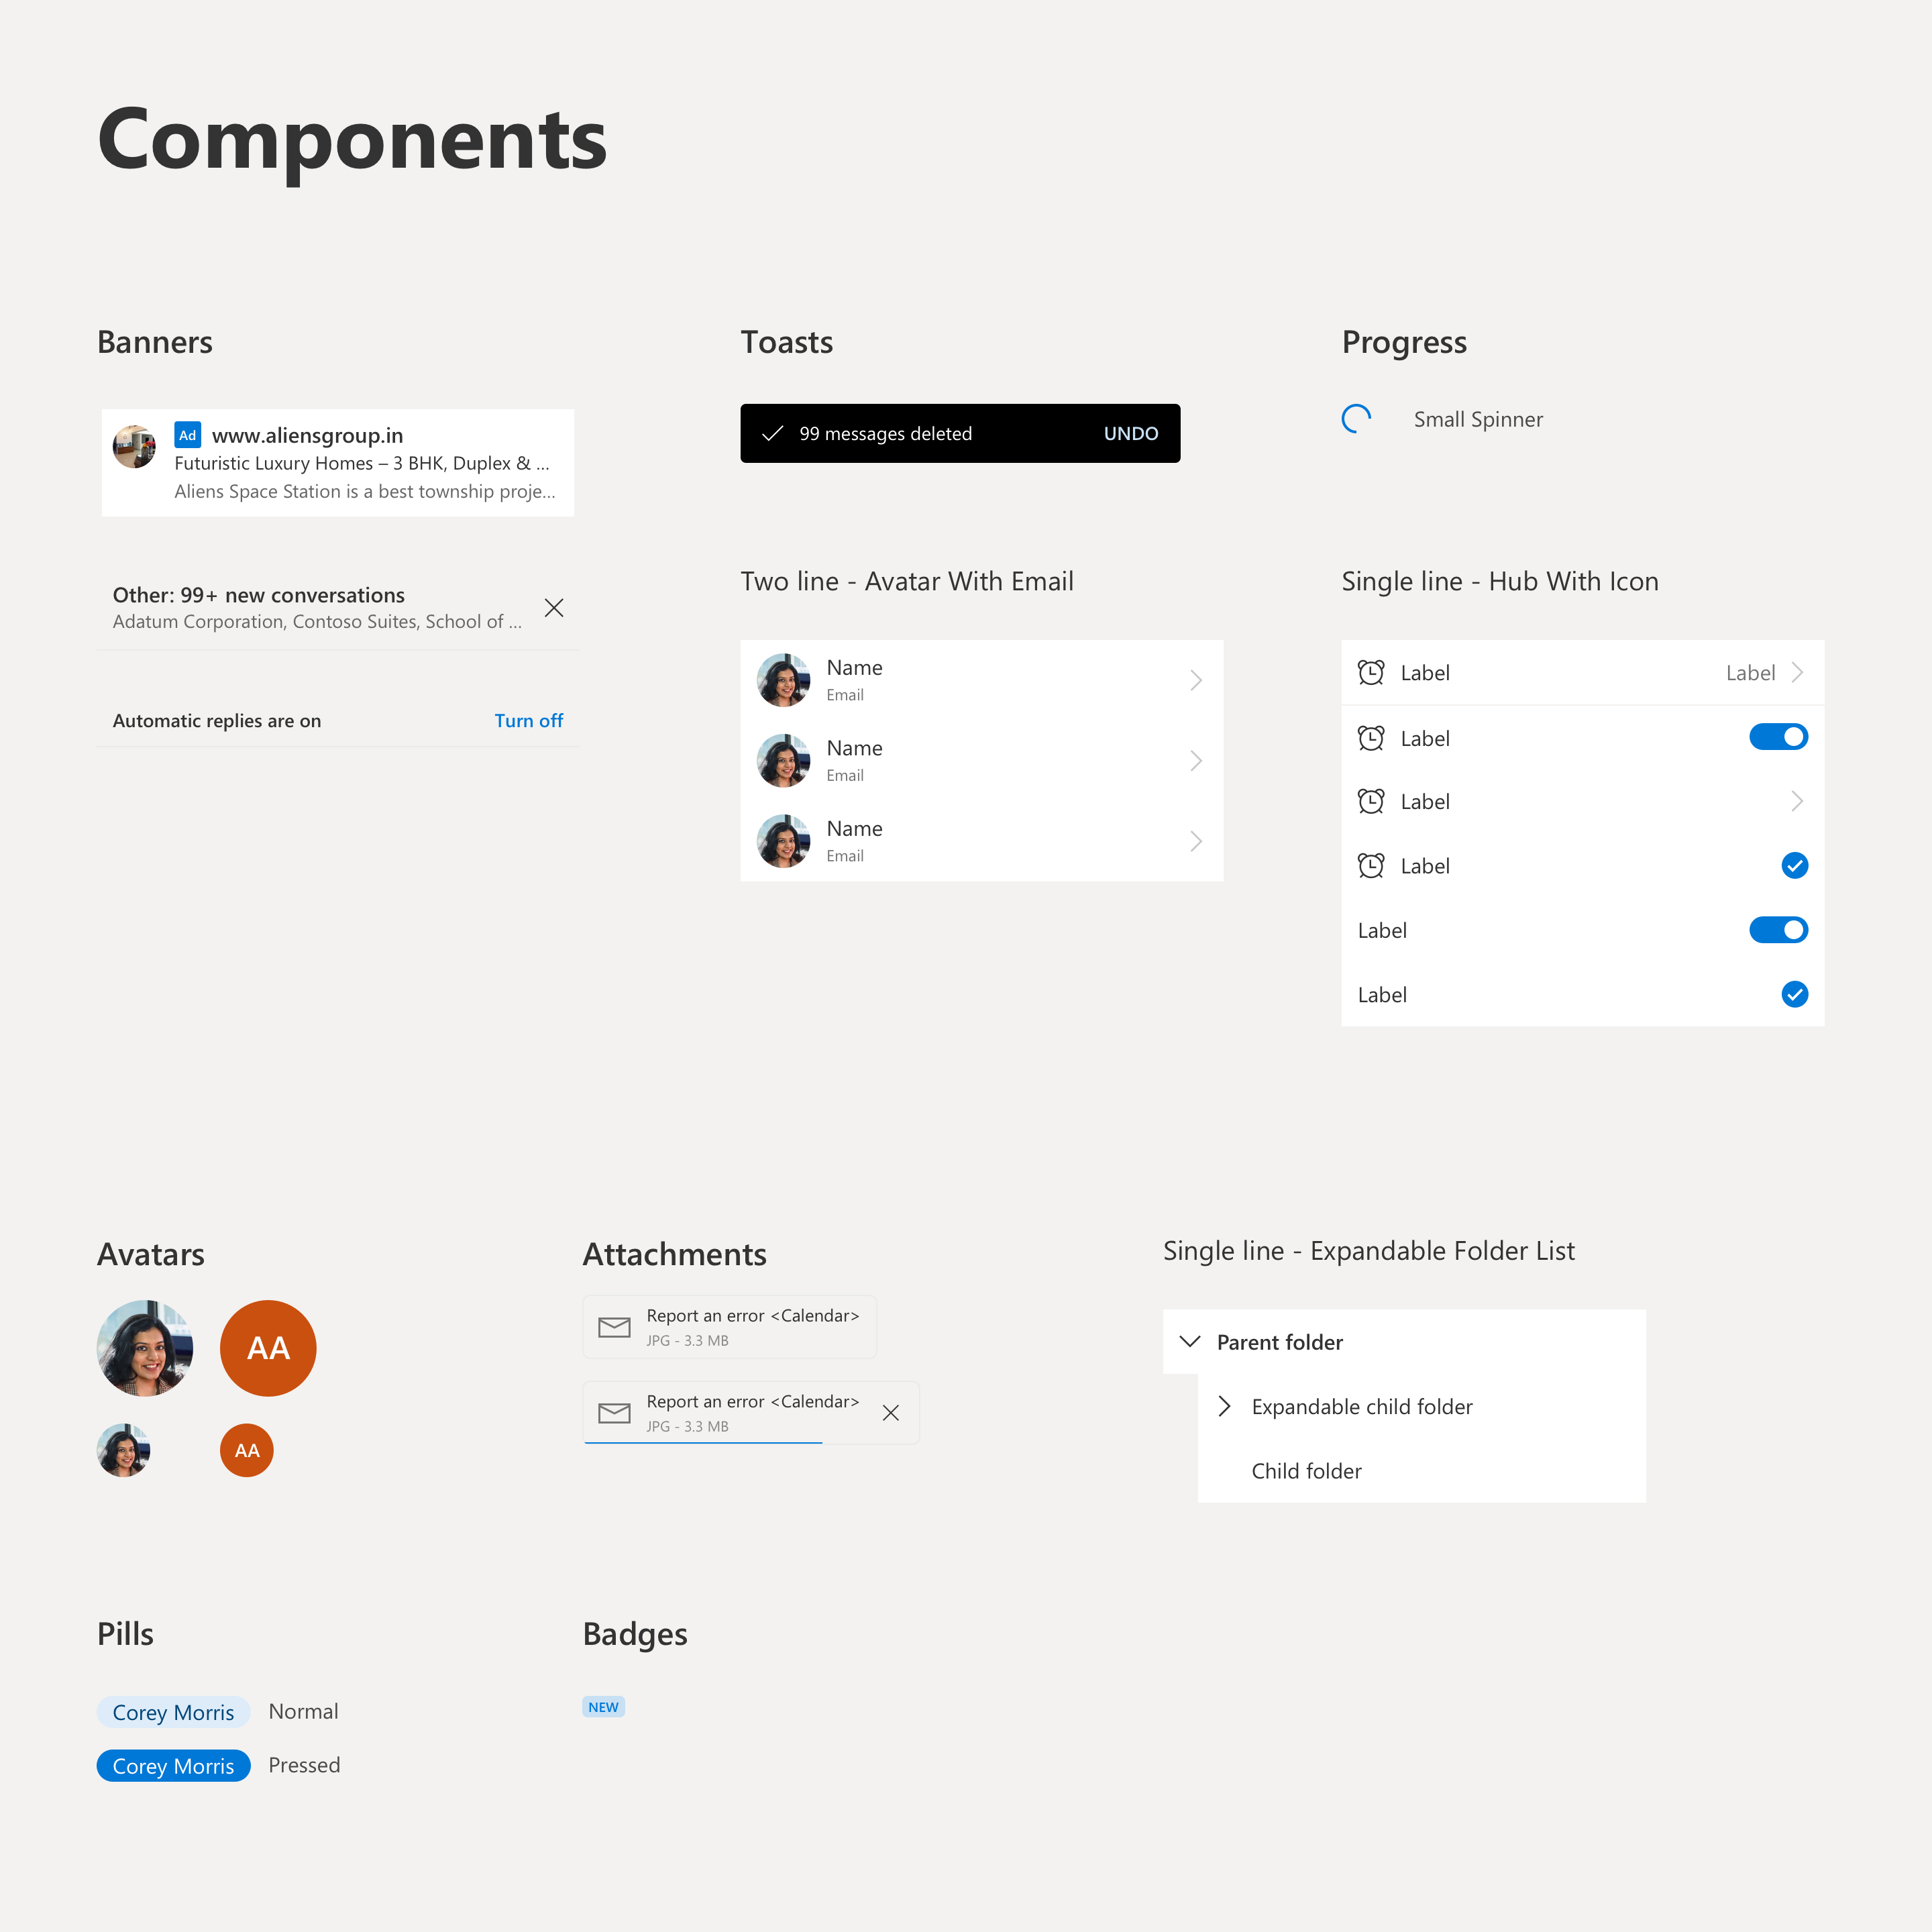 Outlook-Mobile-Web-Design-System-Components-1